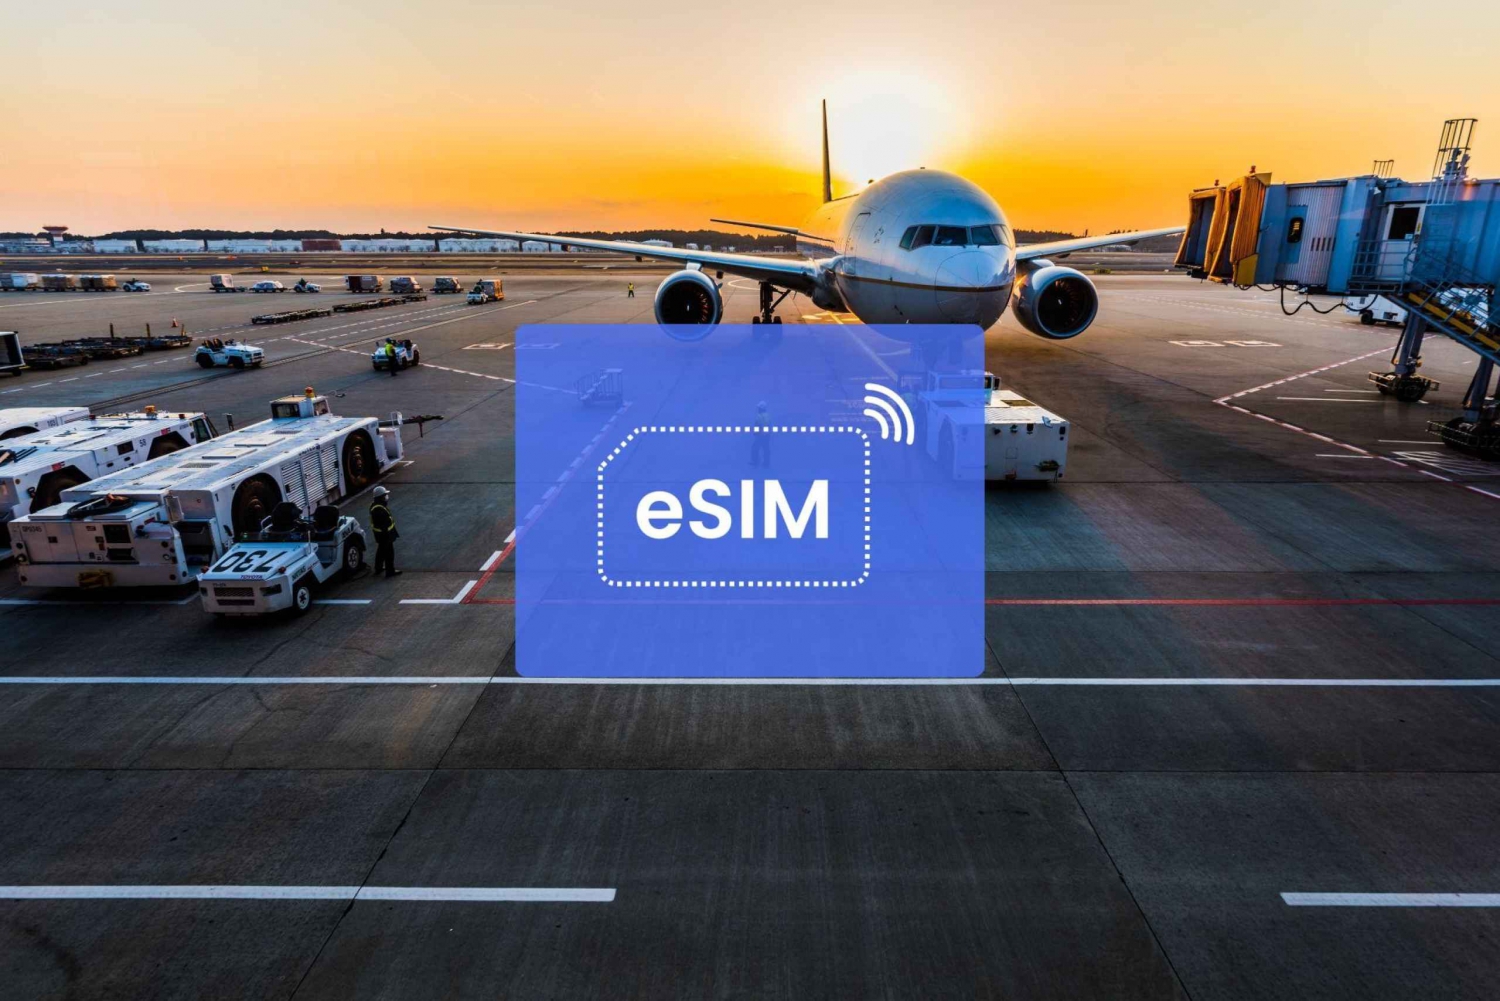 Keflavík Airport: Iceland/ Europe eSIM Roaming Mobile Data